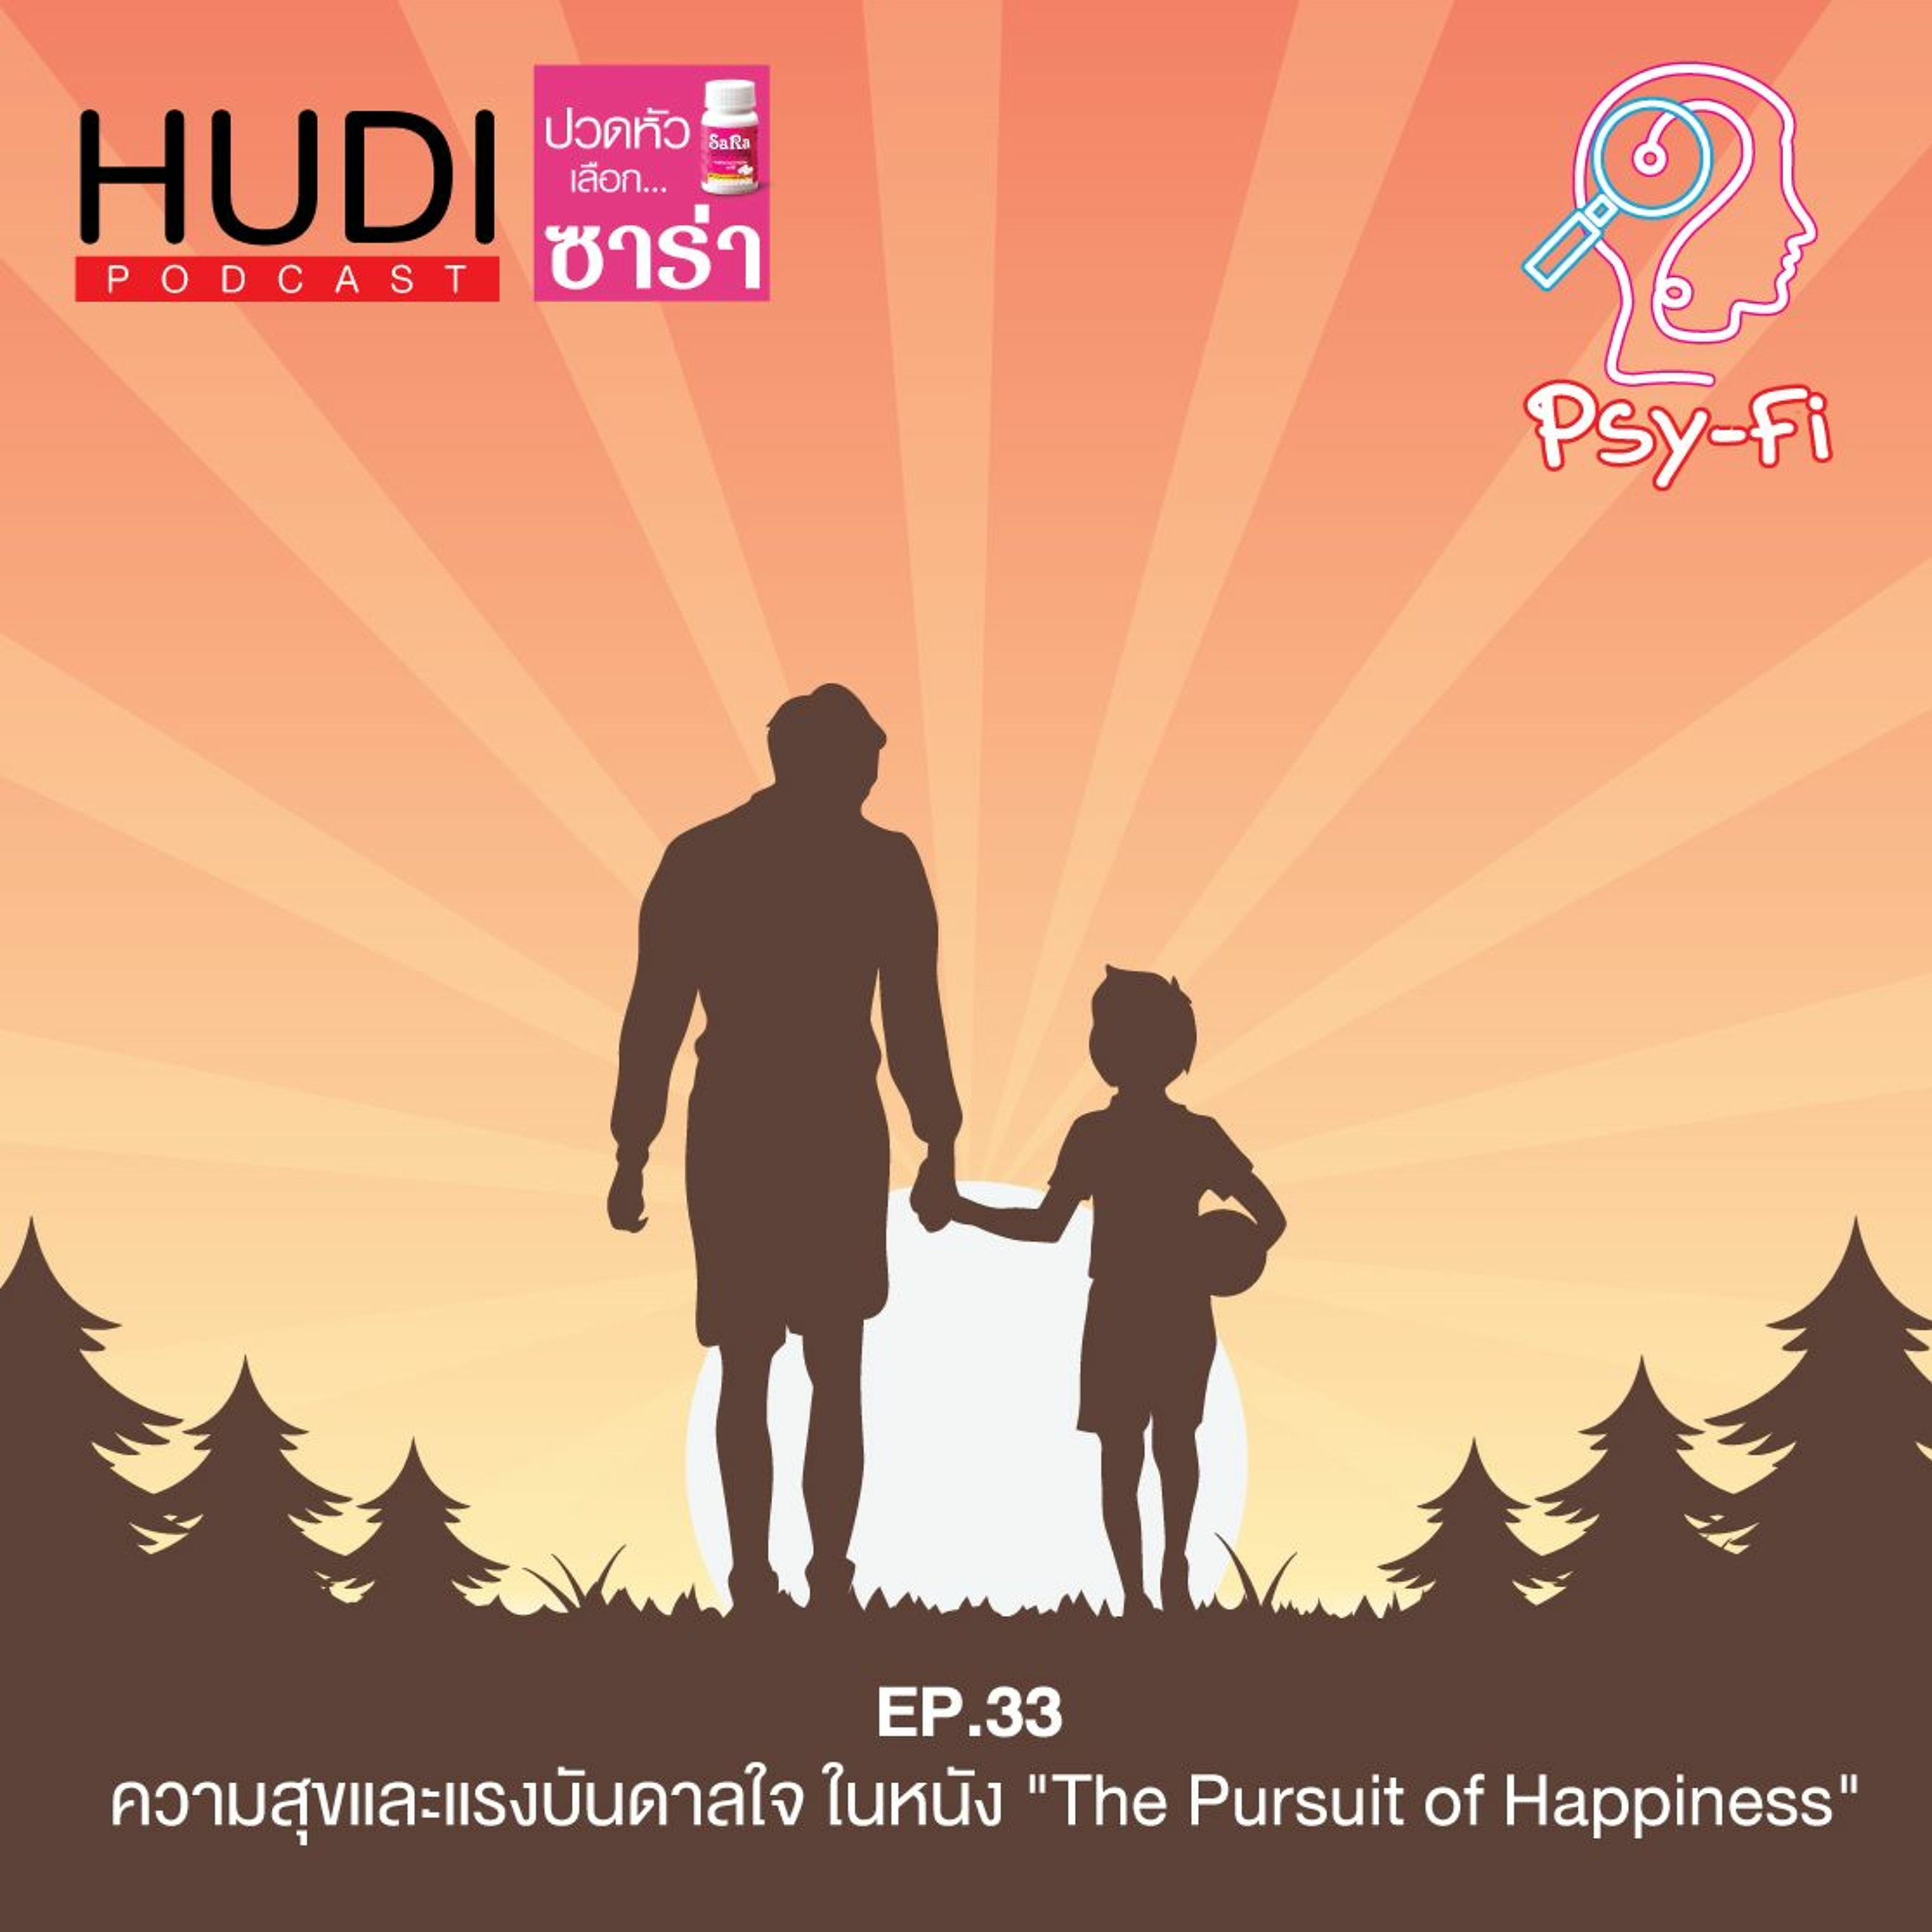 Psy-Fi Ep.33 - ความสุขและแรงบันดาลใจ ในหนัง "The Pursuit of Happyness"